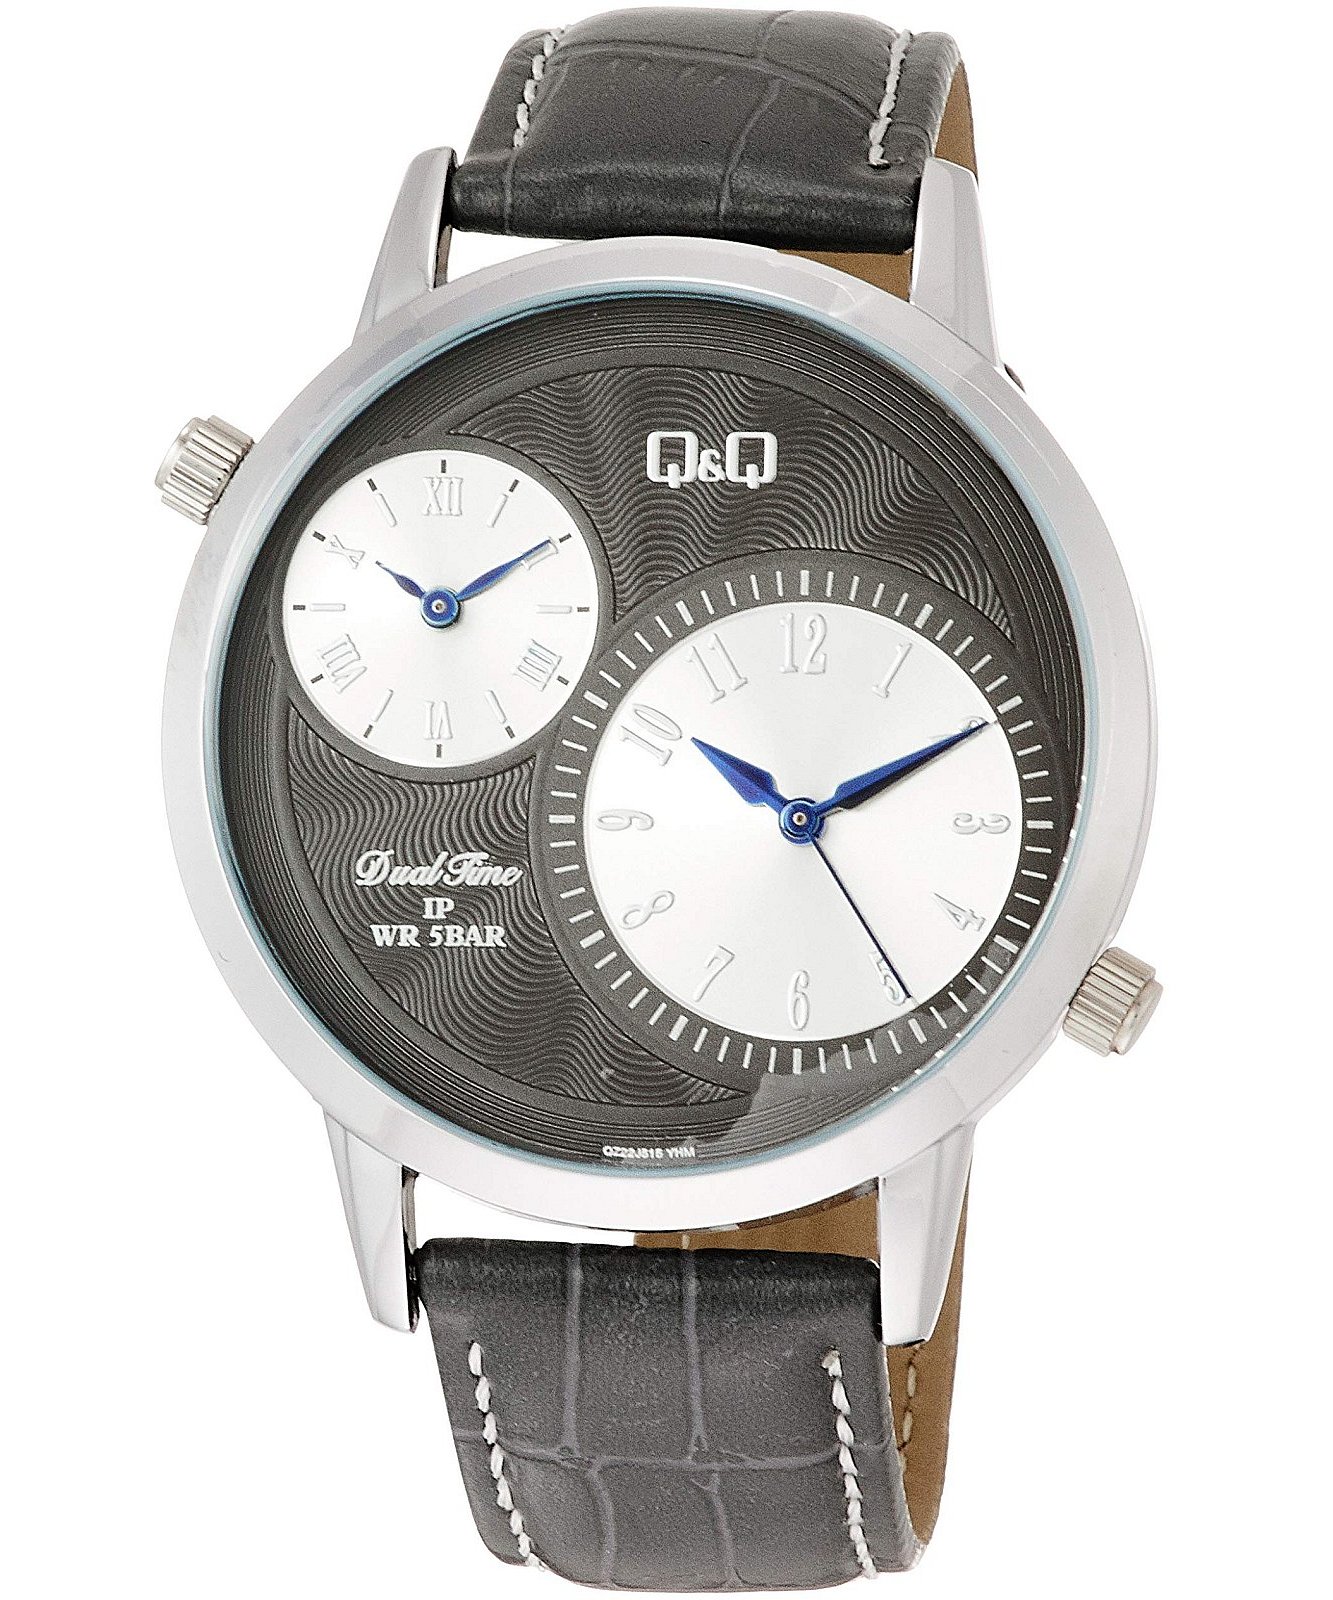 Q&Q QZ22-515 - Dual Time Limited Edition • Watchard.com